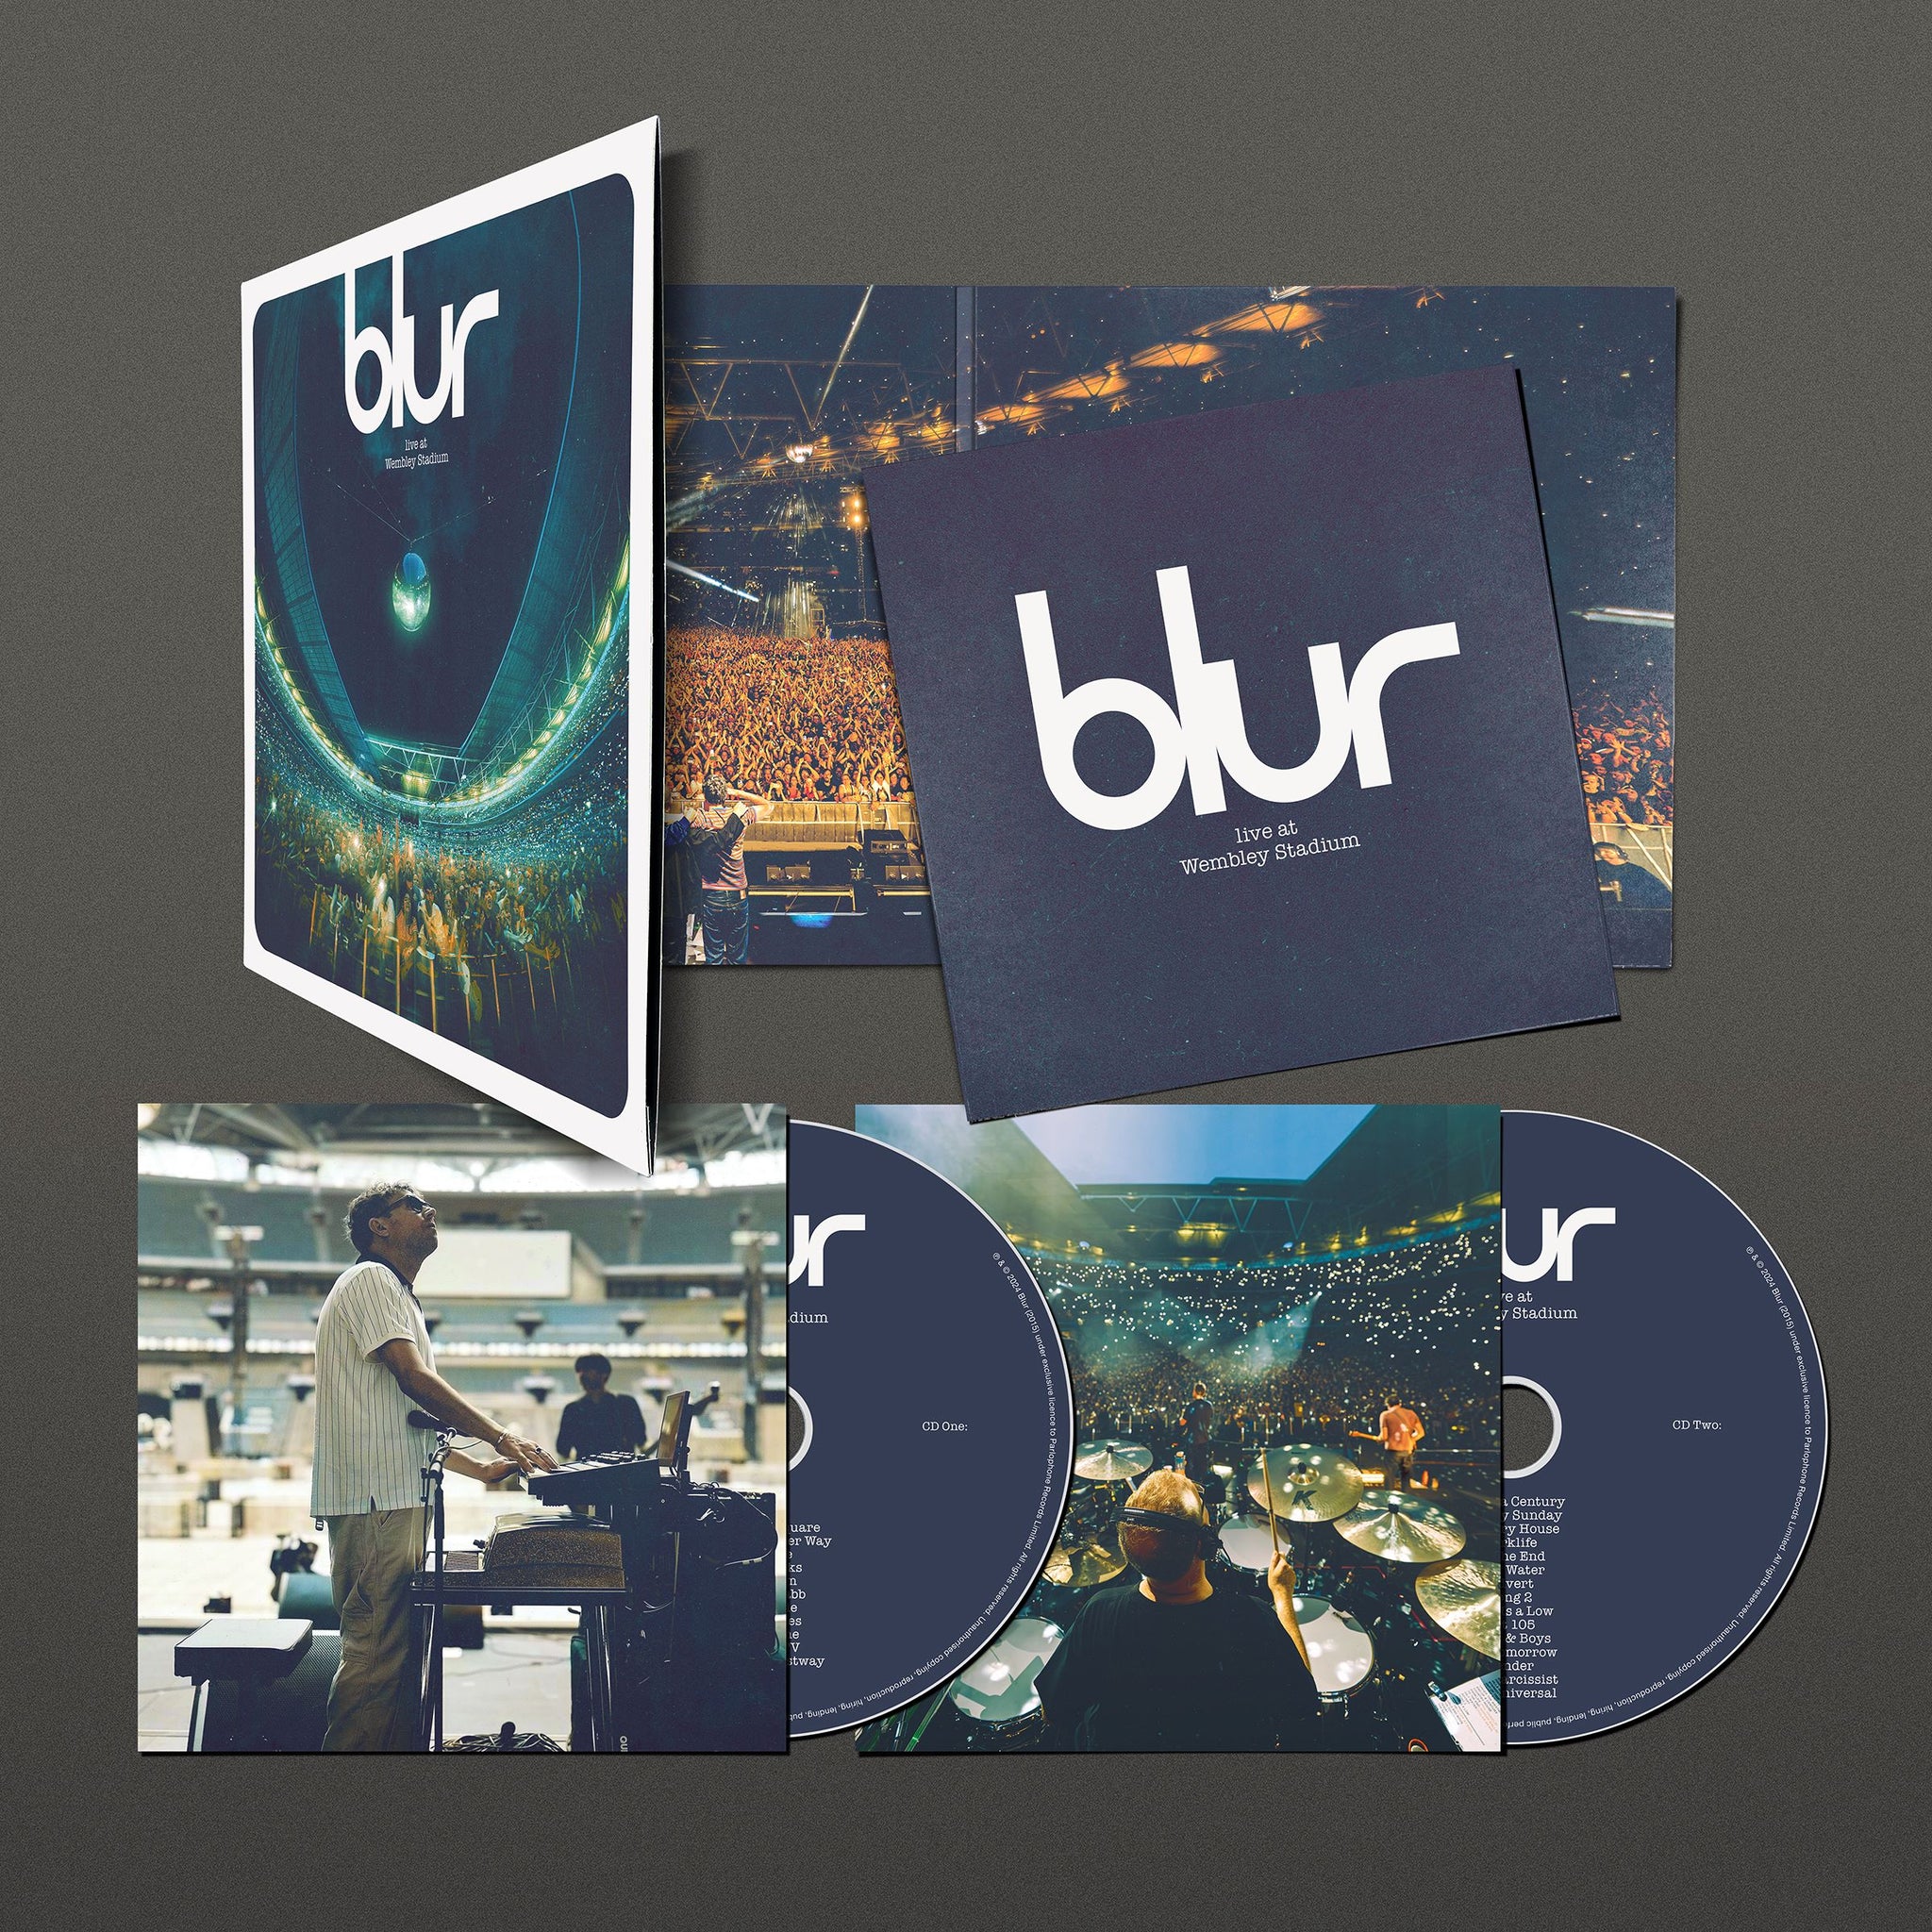 Blur "Live At Wembley Stadium" CD - PRE-ORDER